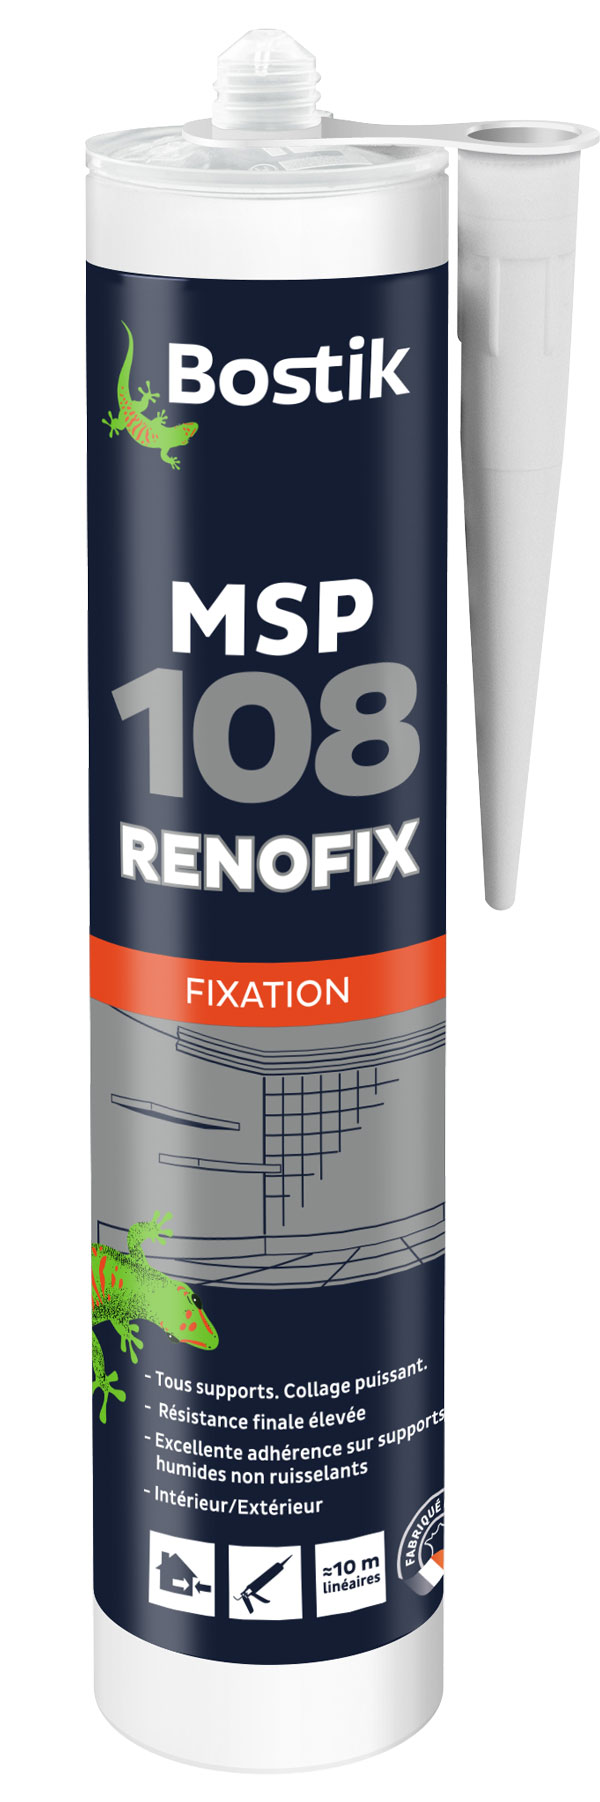 MSP 108 RENOFIX fixing putty © Bostik